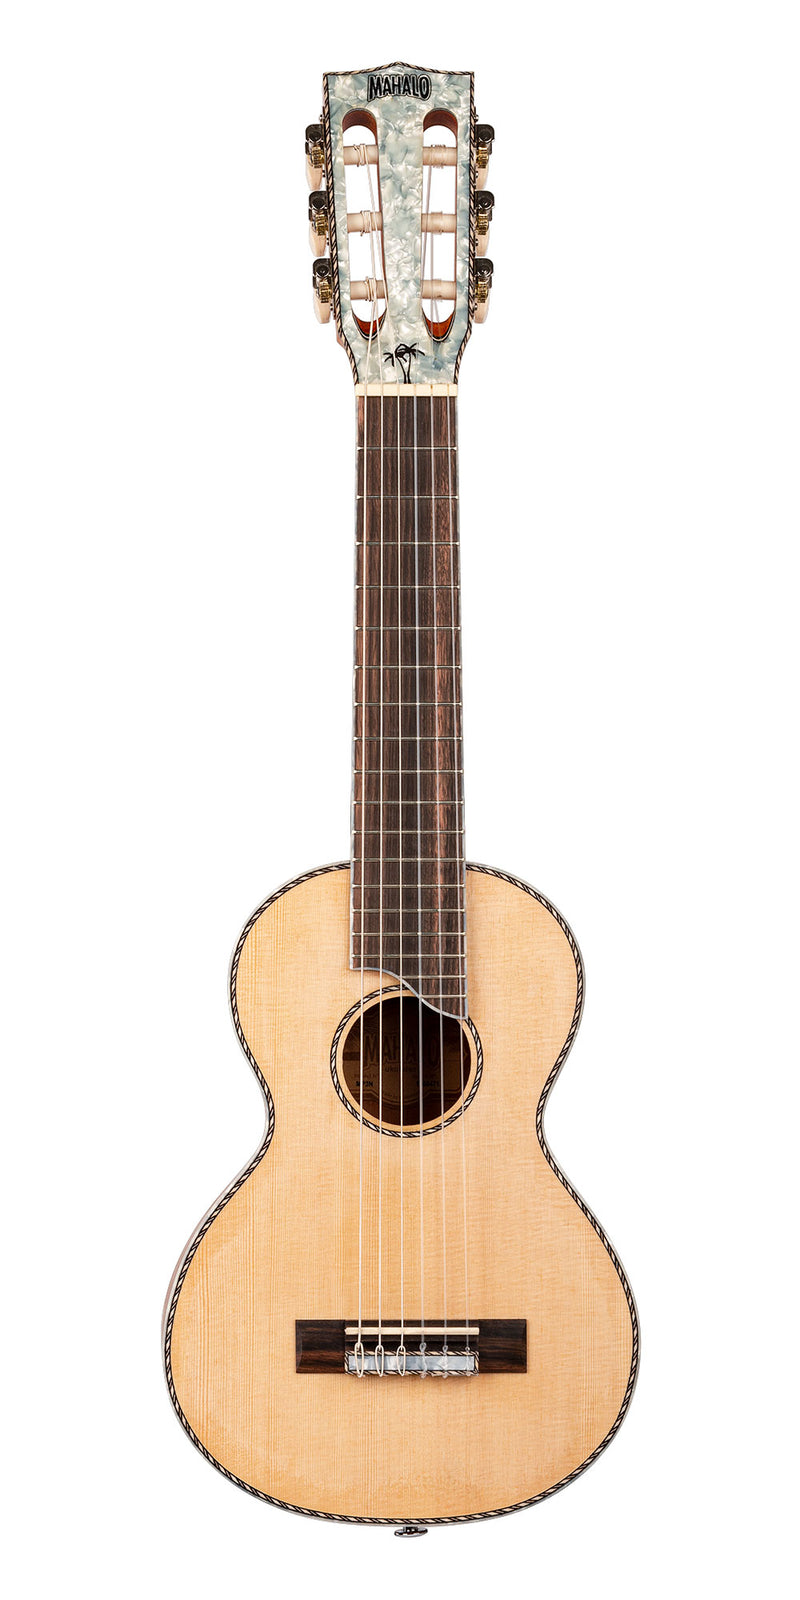 Mahalo MPEARL5 Pearl Series Guitarlélé